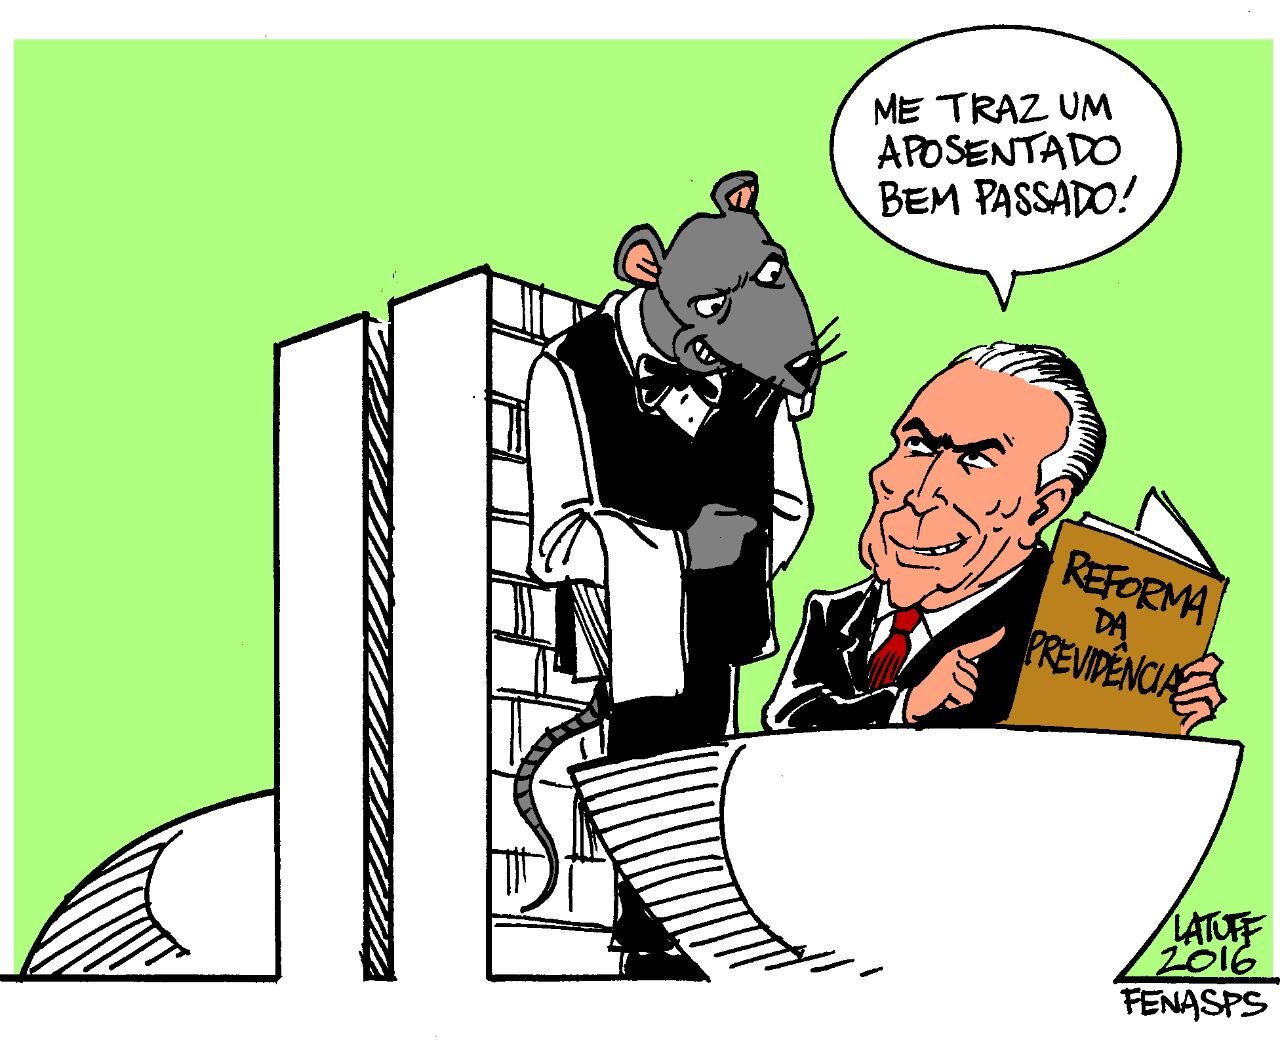 Charge do Latuff ironiza a Reforma da Previdência que o presidente interino Michel Temer quer promulgar (clique para ampliar)